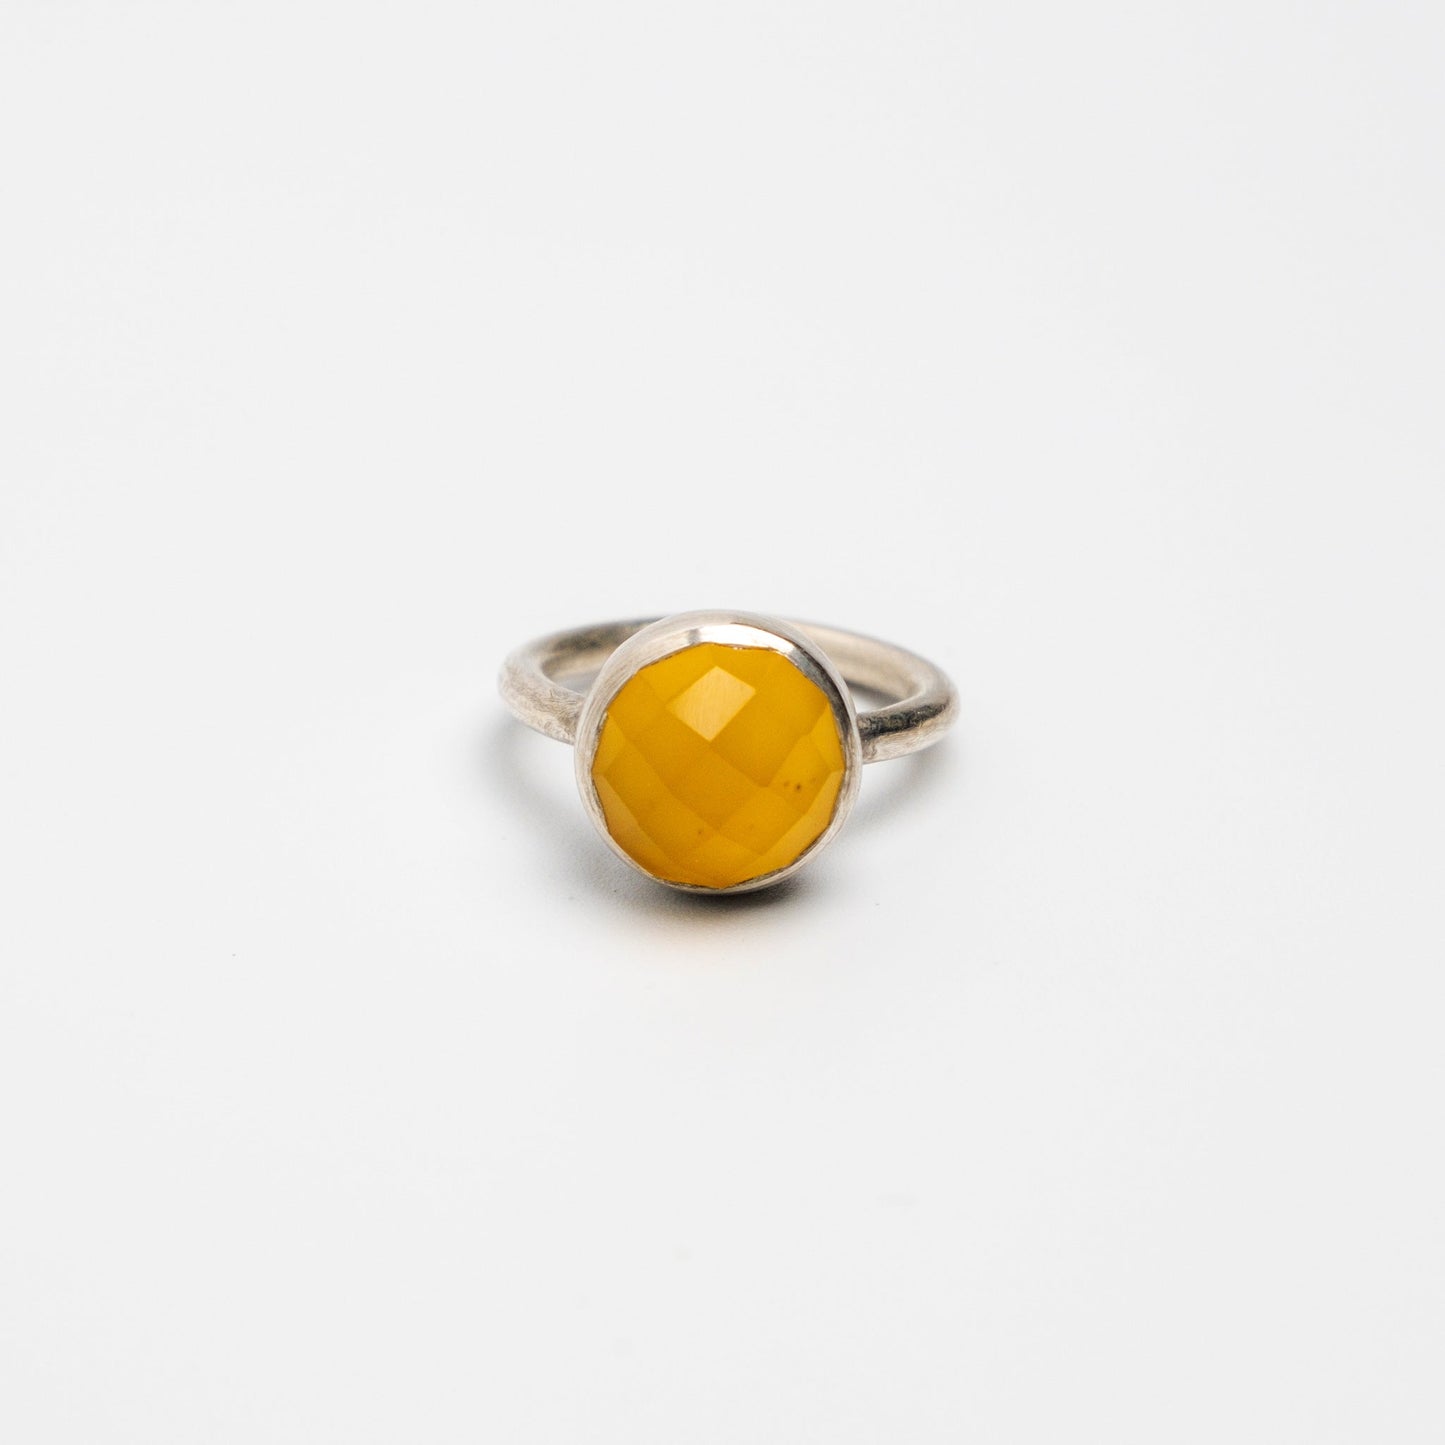 Silver 925 × Natural stone ring (round)/ Samira